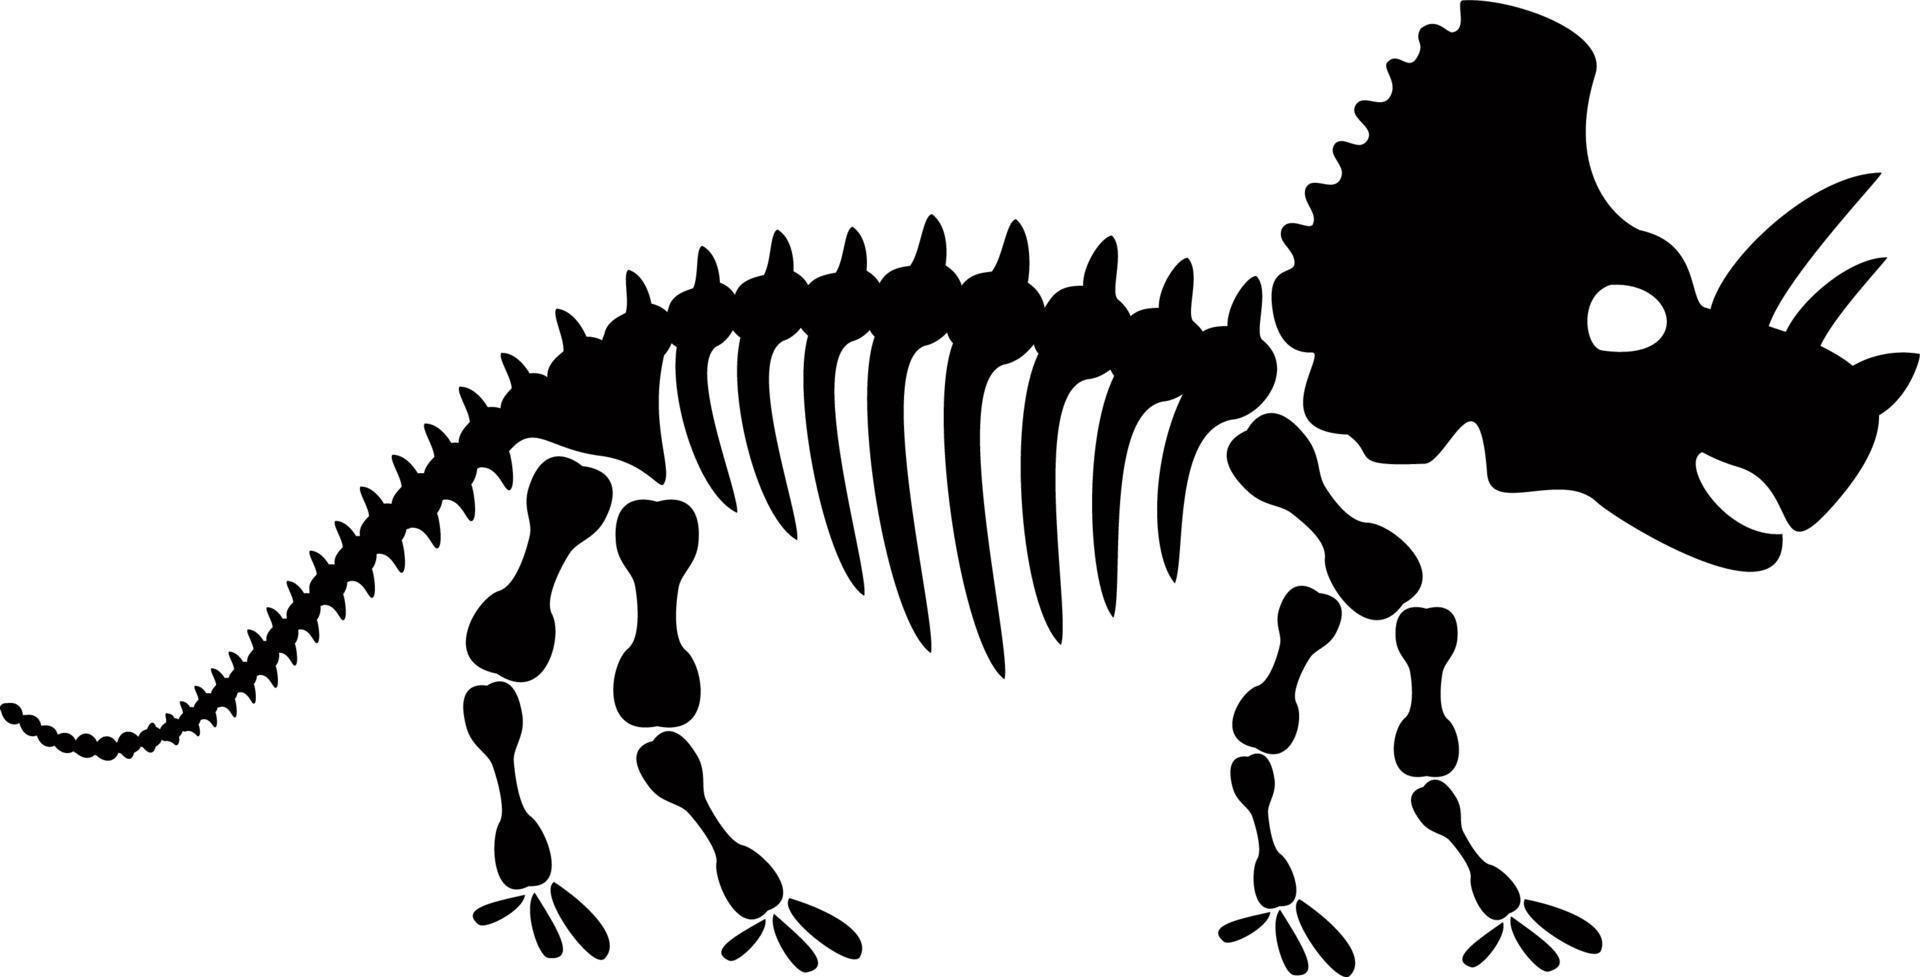 Triceratops dinosaur skeleton negative space silhouette illustration. Prehistoric creature bones isolated monochrome clipart. The dinosaur ate vegetation, Triceratops fossil design element vector